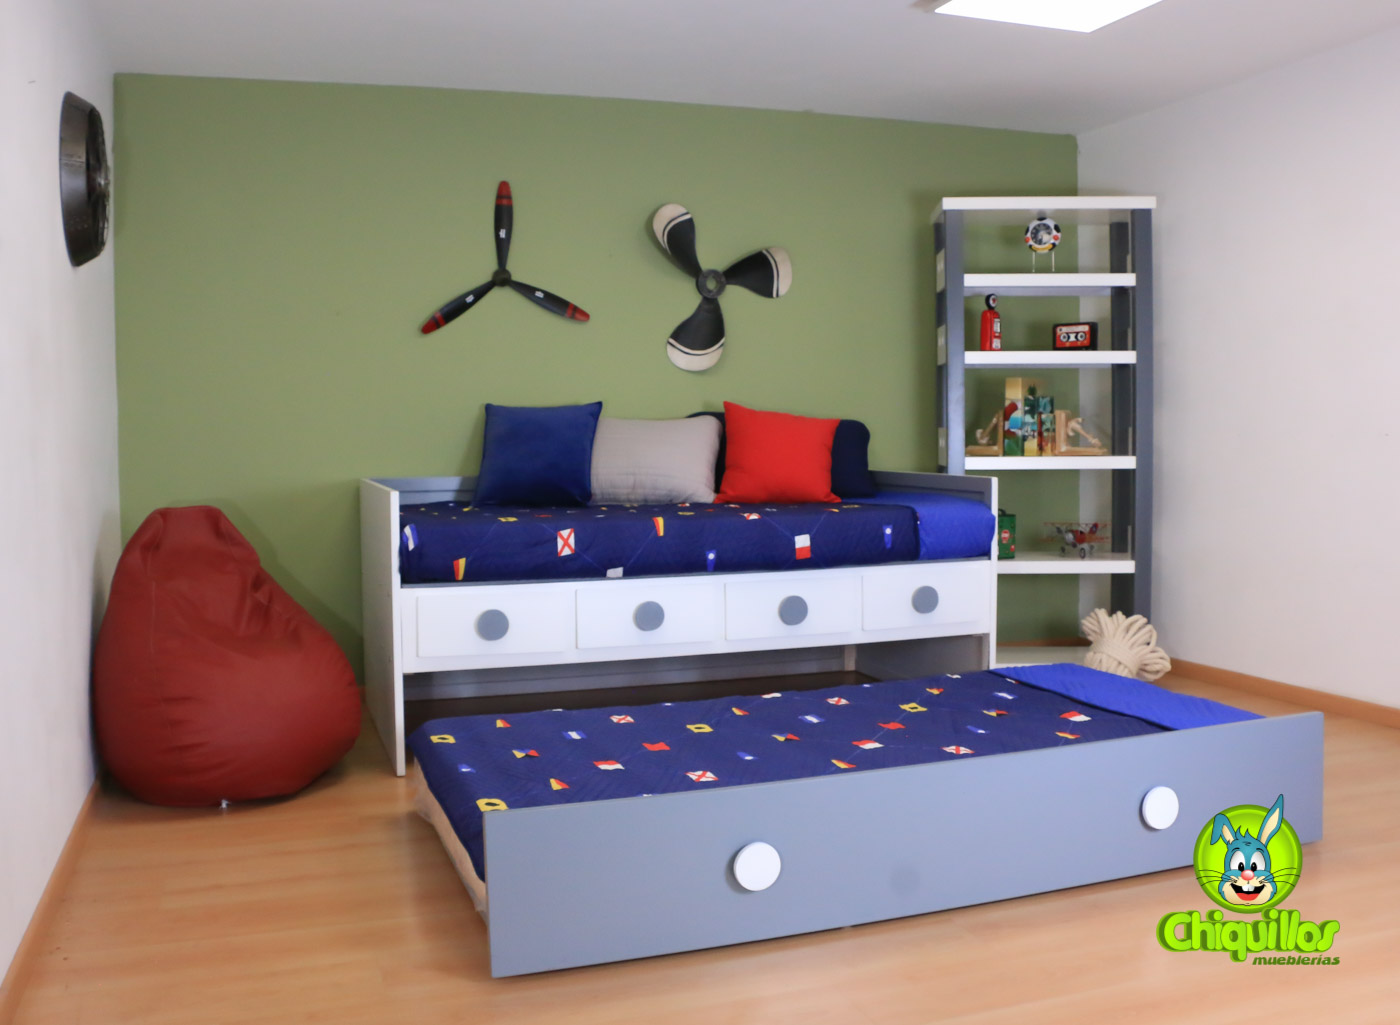 Camas Cuna - Chiquillos Muebles Infantiles y Juveniles